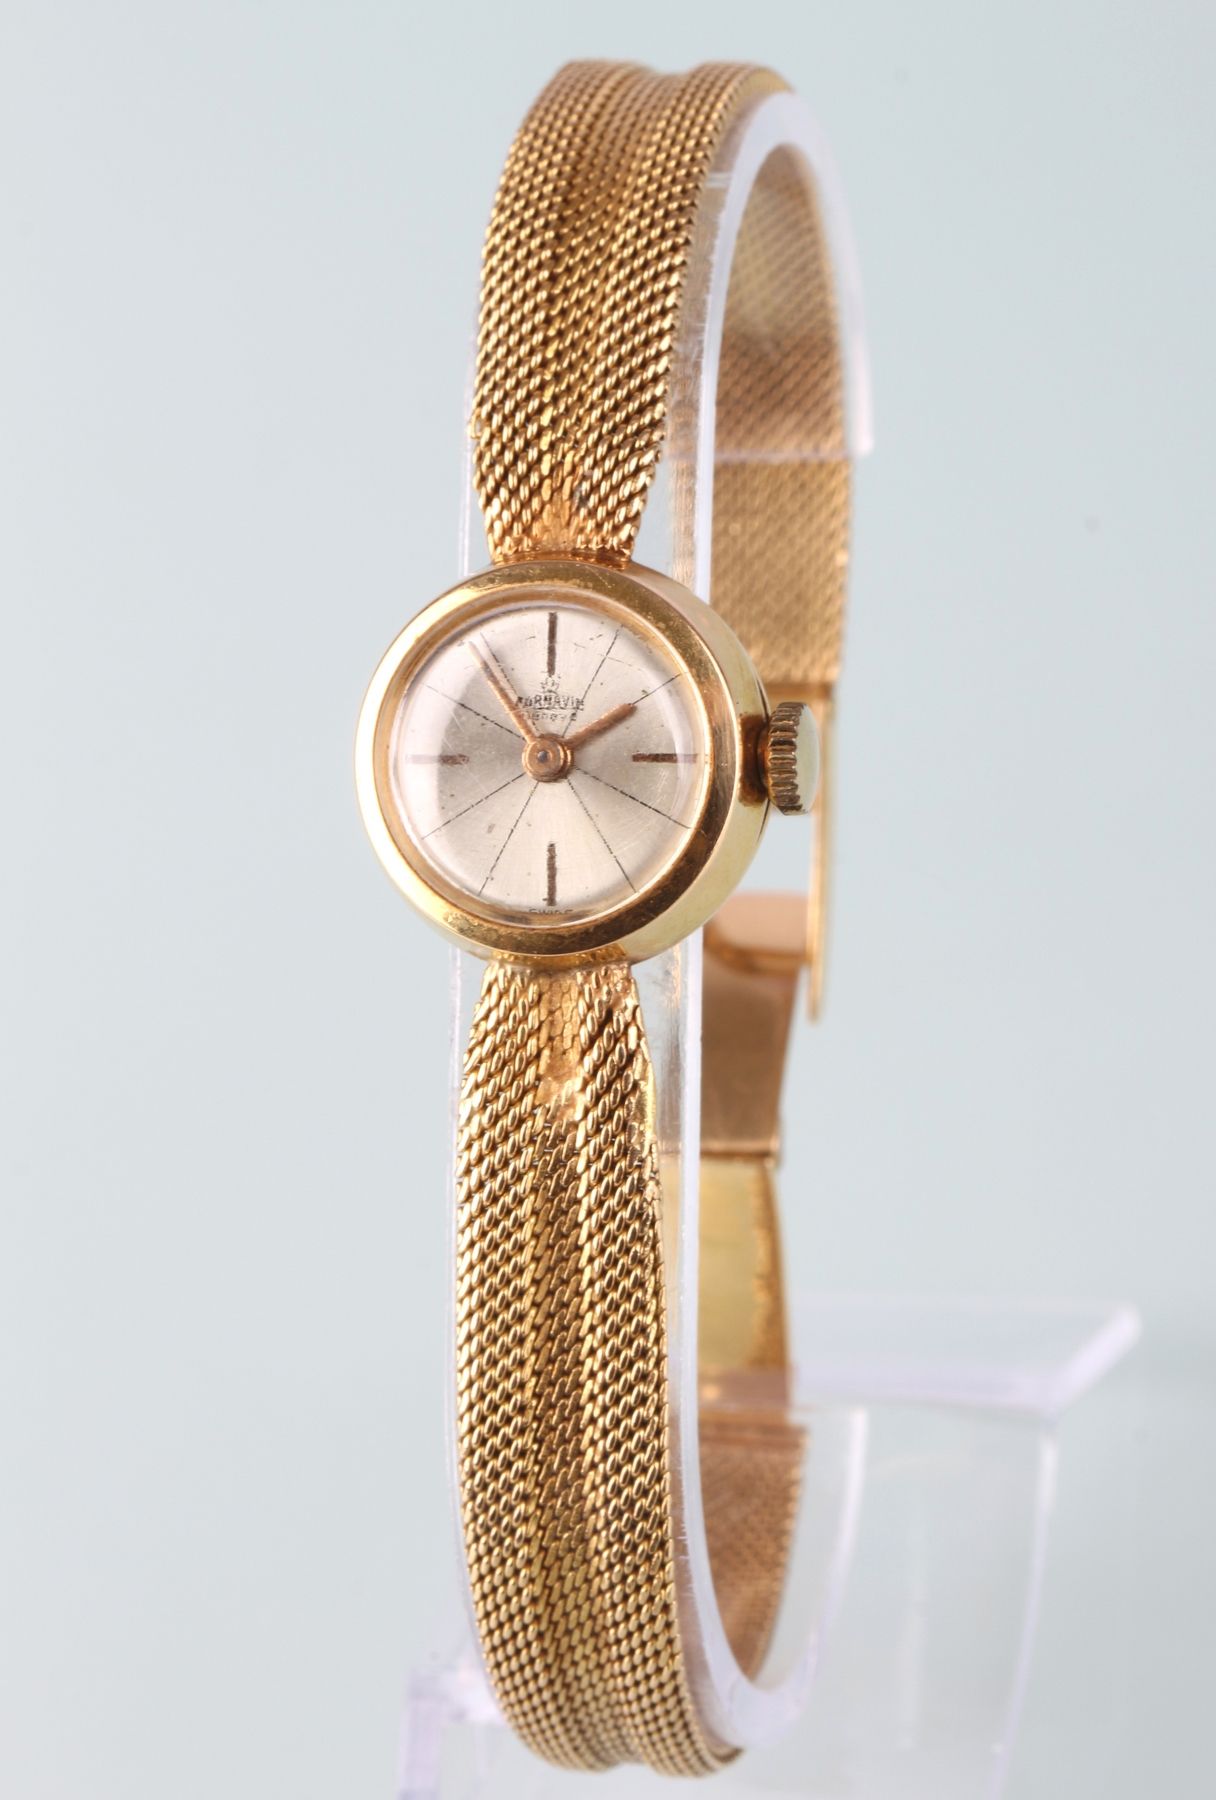 750 Gold Cornavin Geneve Armbanduhr, 18K gold wristwatch, Orologio da polso sviz&hellip;